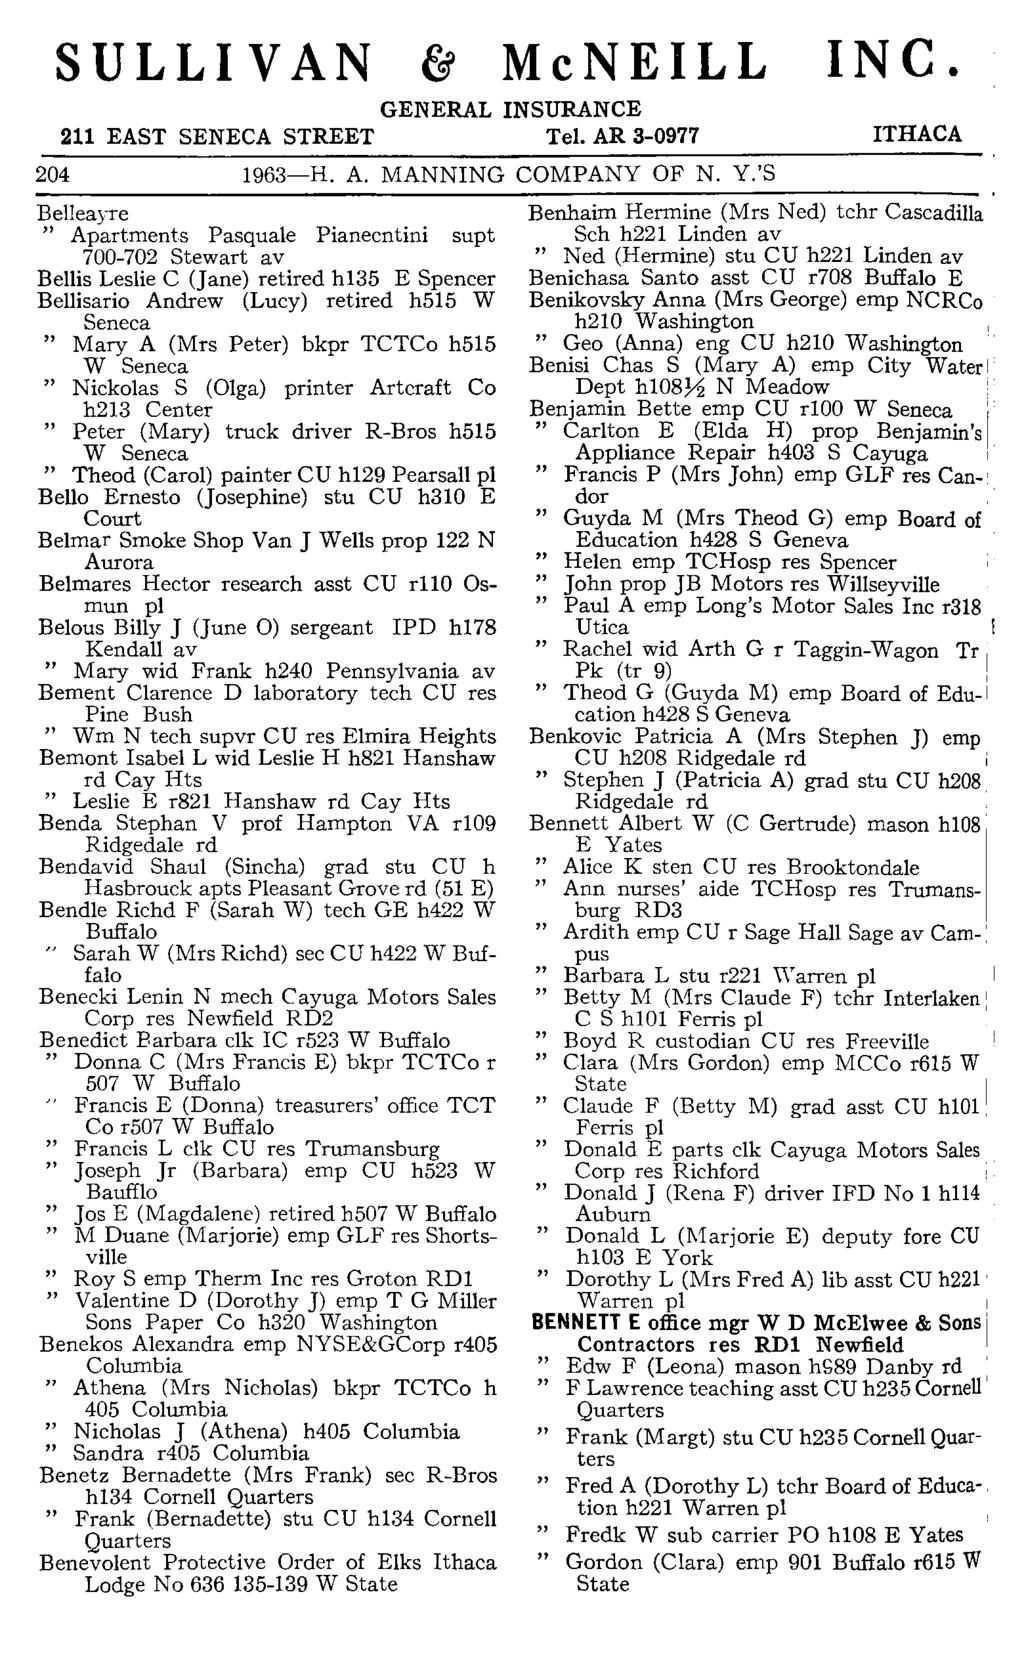 SULLIVAN McNEILL INC. GENERAL INSURANCE 211 EAST SENECA STREET Tel. AR 3-0977 204 1963-H. A. MANNING COMPANY OF N. Y.